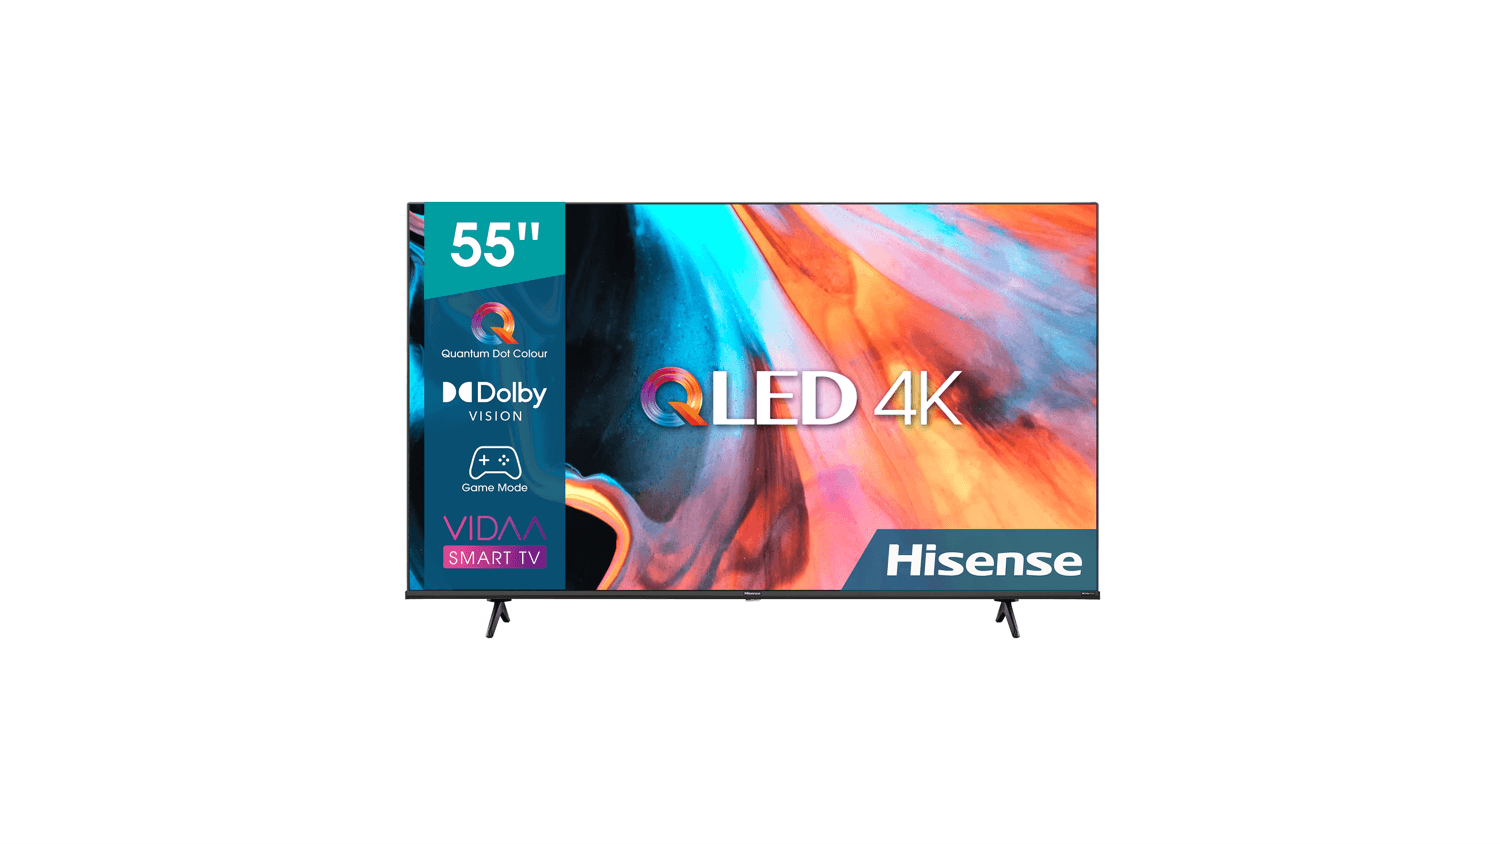 Hauptgewinn - Hisense QLED Smart TV 55" (Beispielbild - Gewinn kann abweichen)